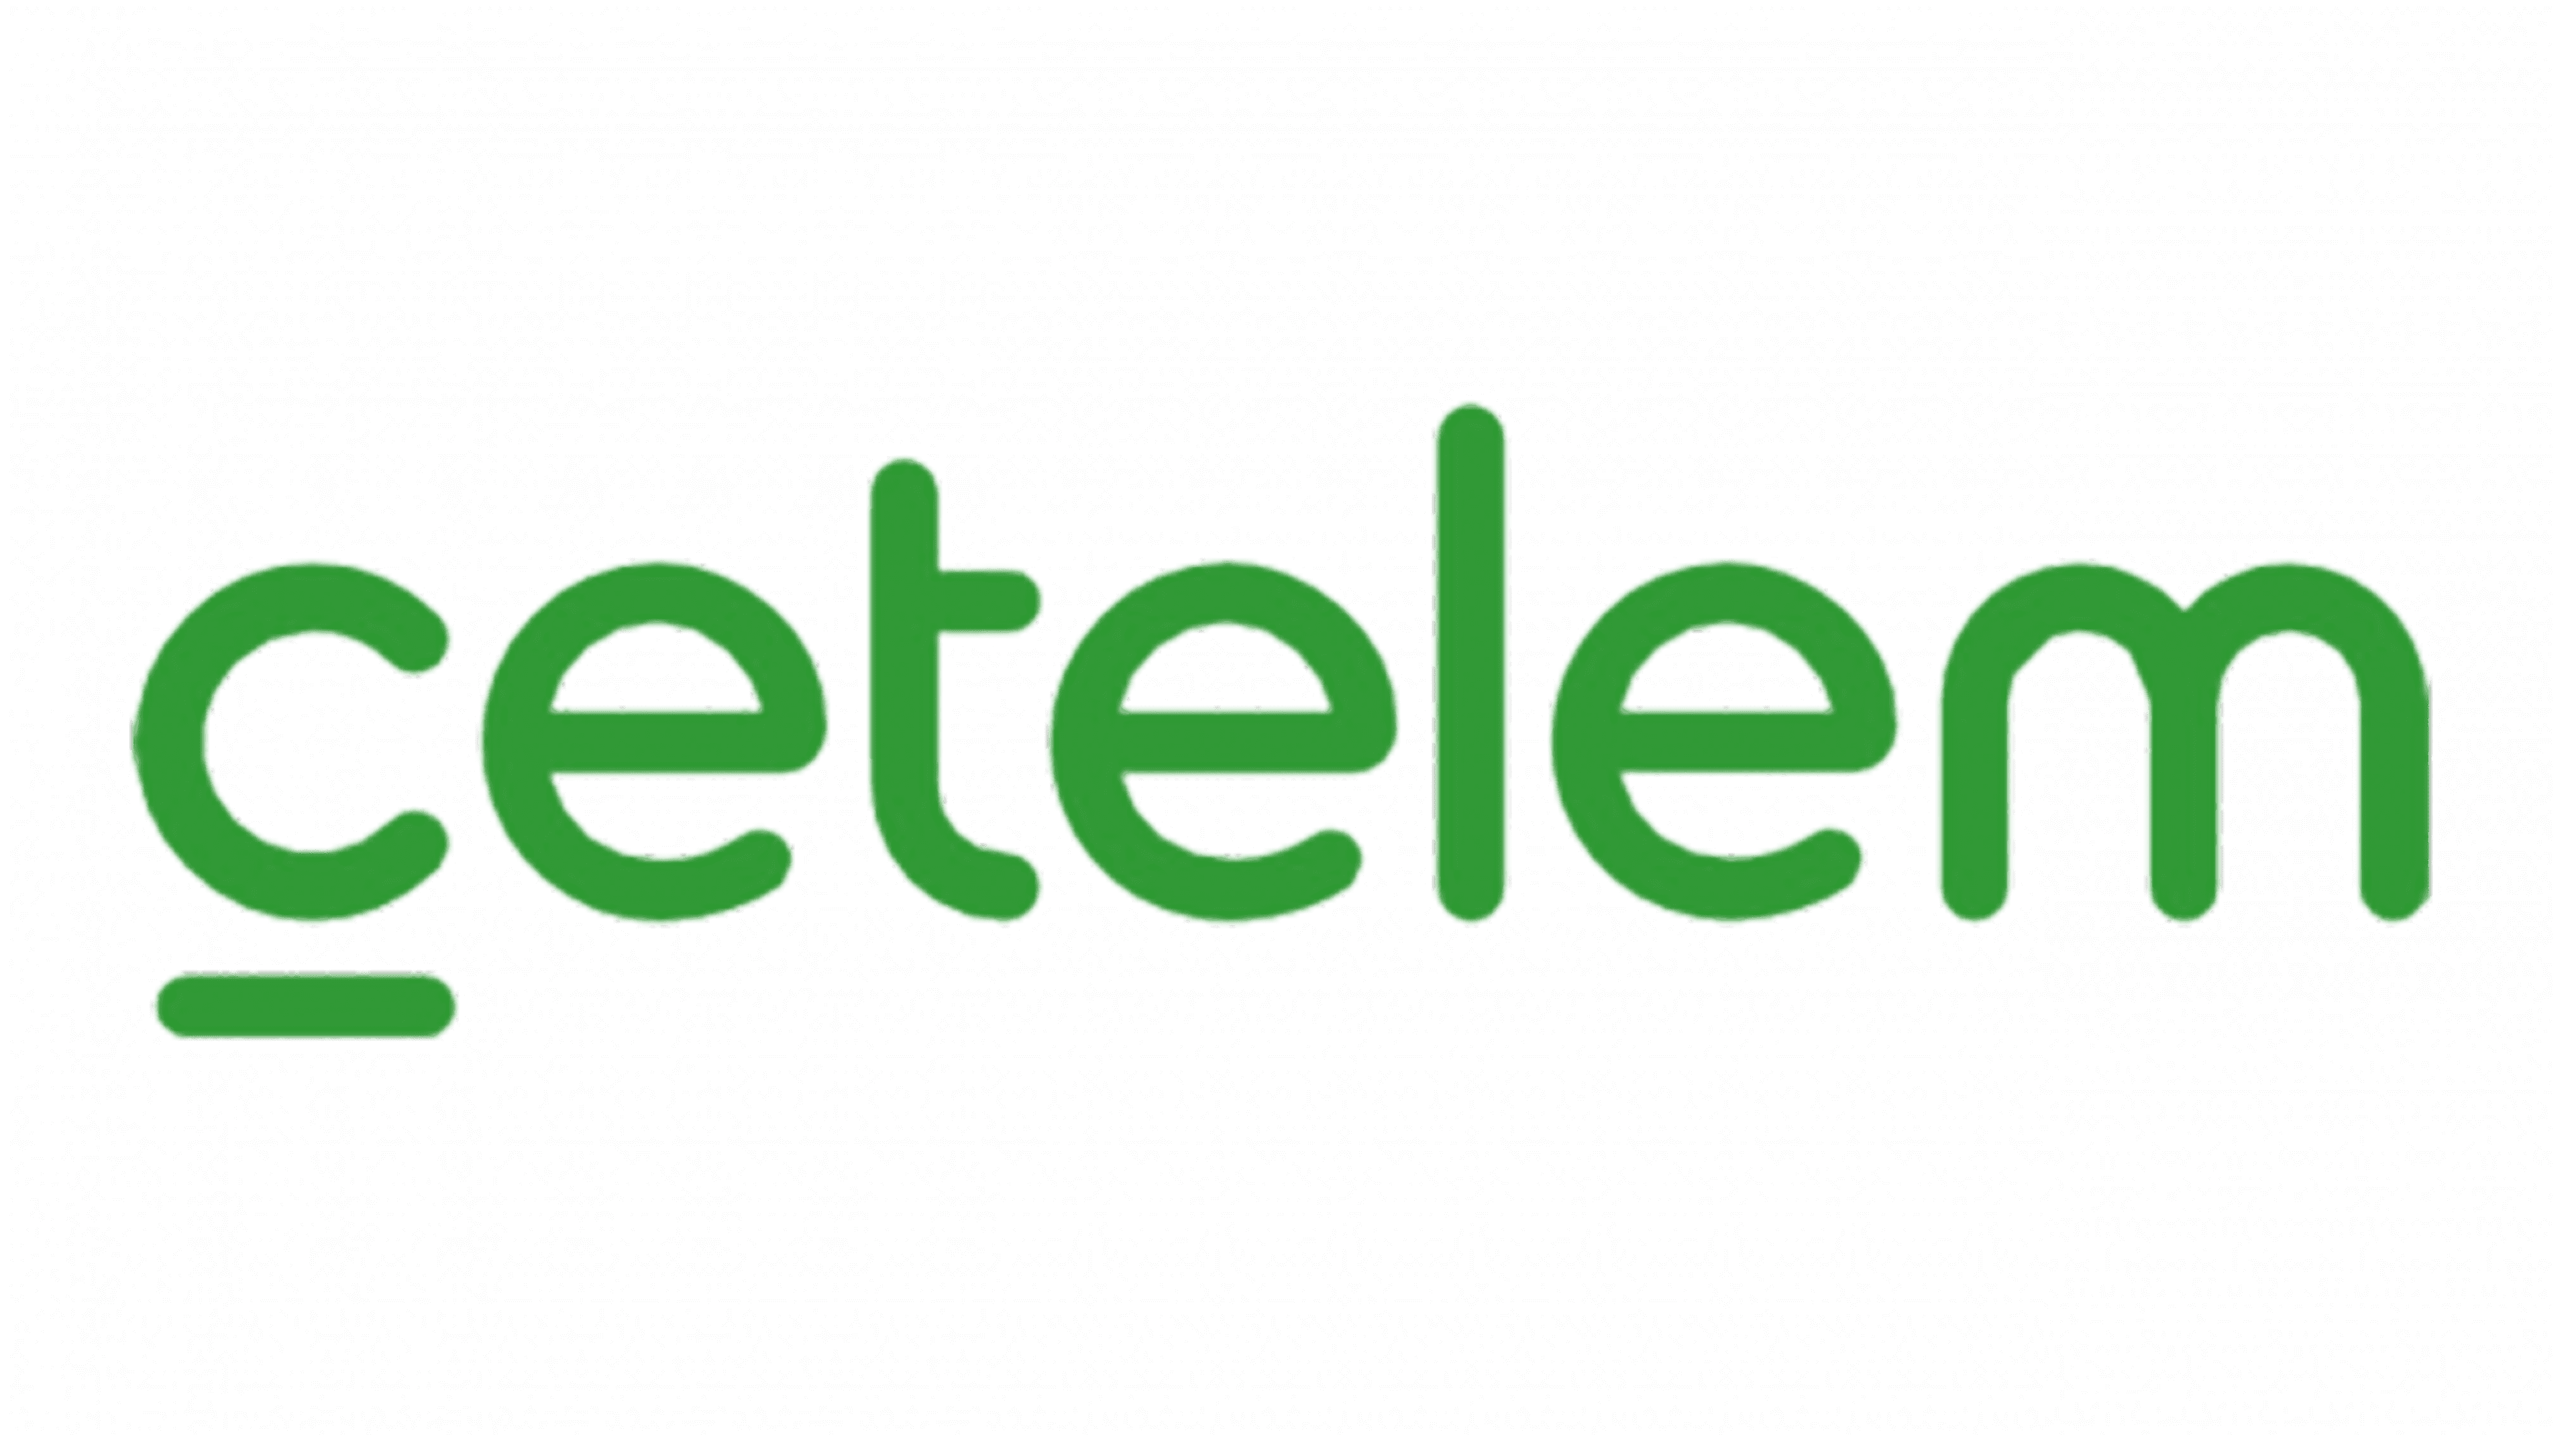 Cetelem-logo